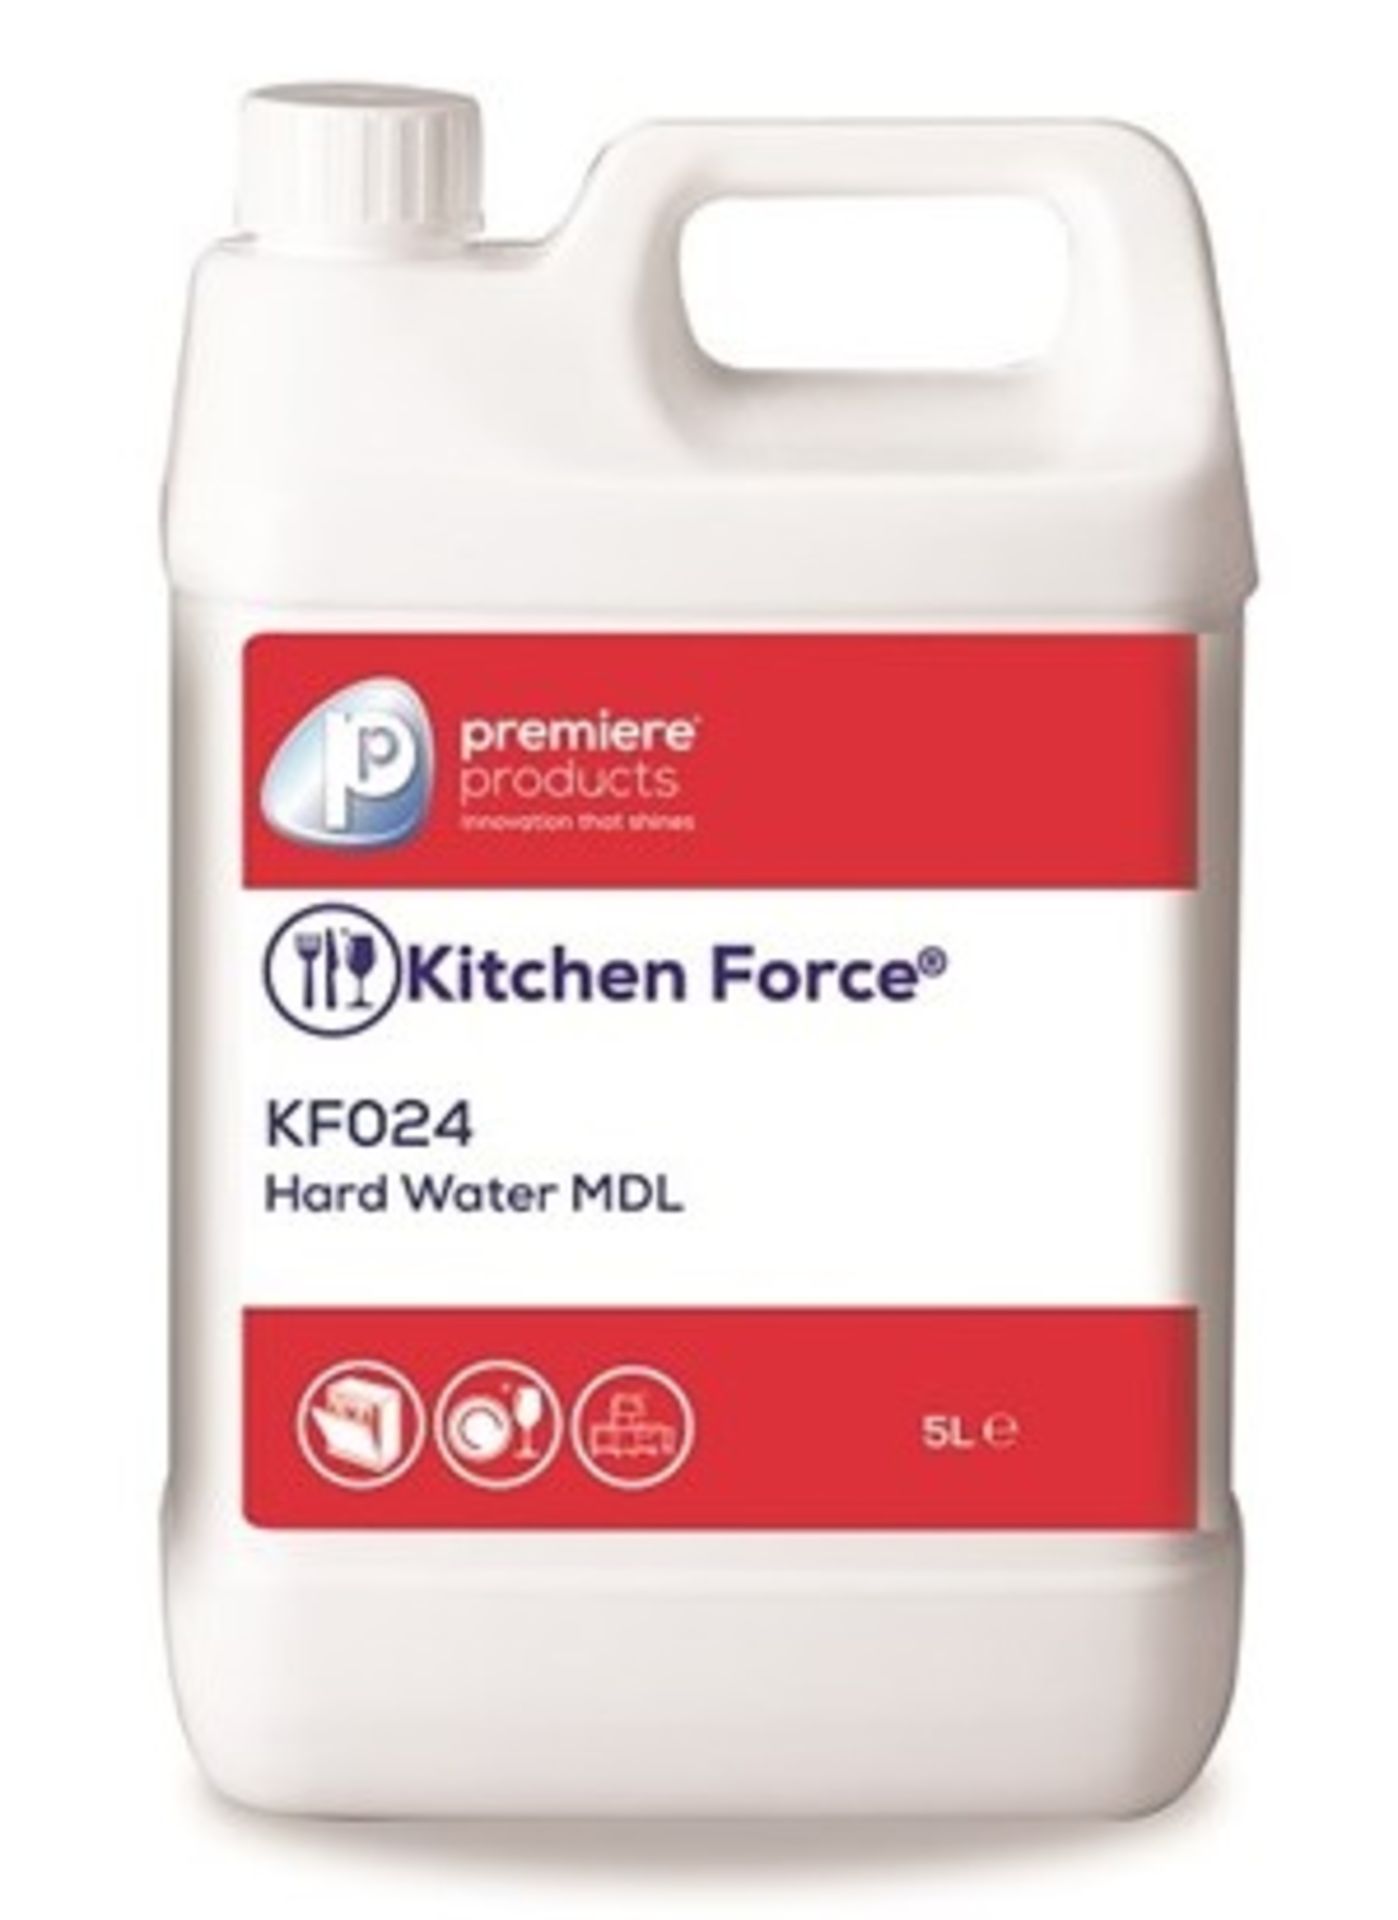 2 x Premiere 5 Litre Kitchen Force Hard Water Machine Dishwasher Detergent - Premiere Products - Inc